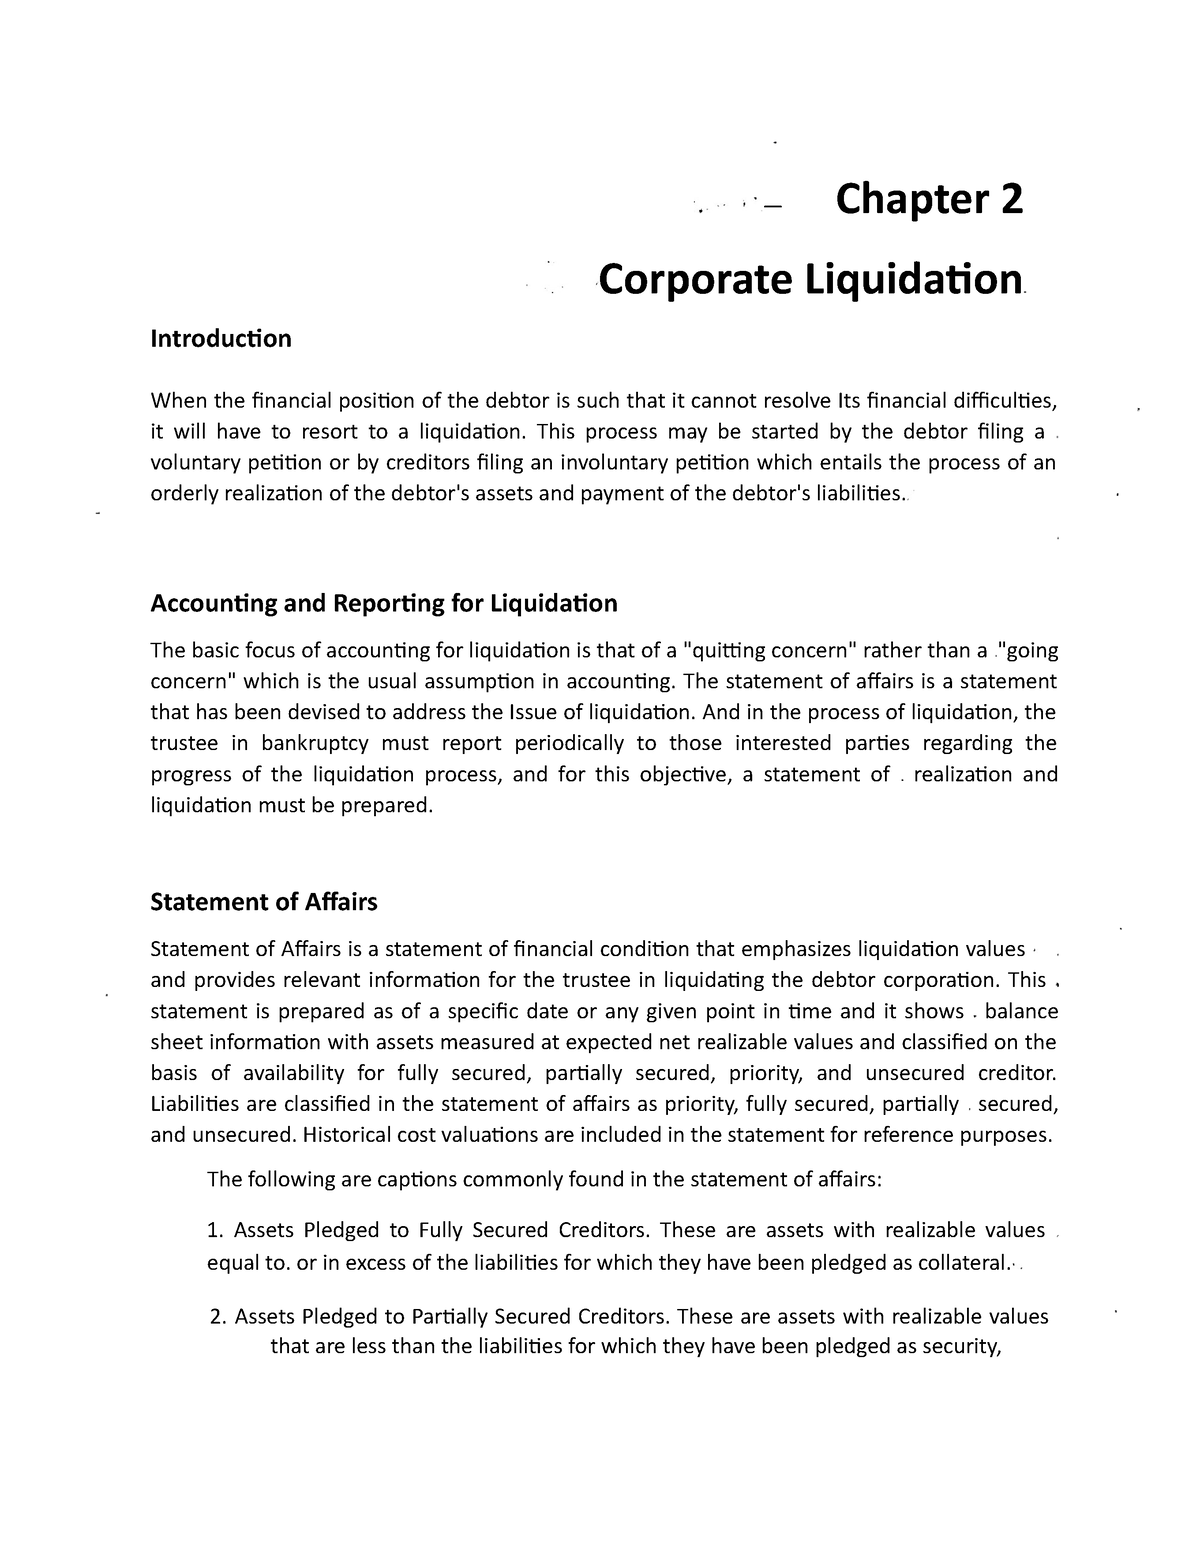 essay on liquidation of a company